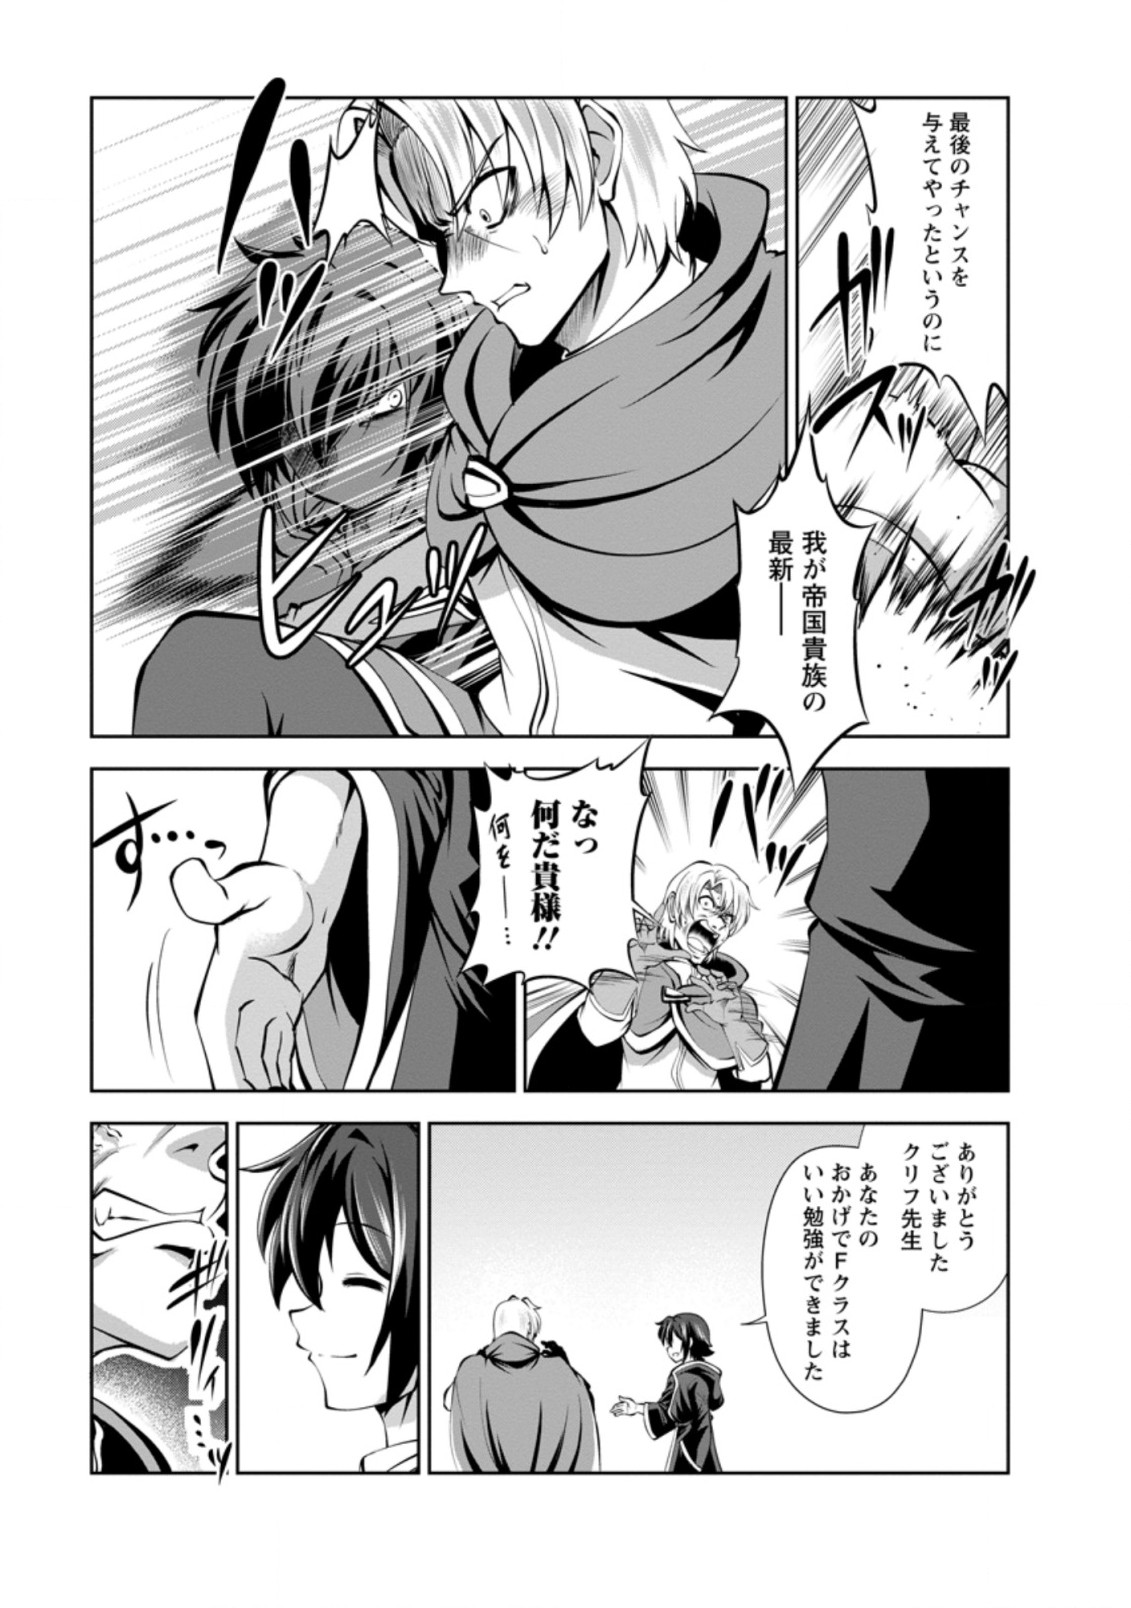 Read Manga Shinka no Mi - Chapter 40.3